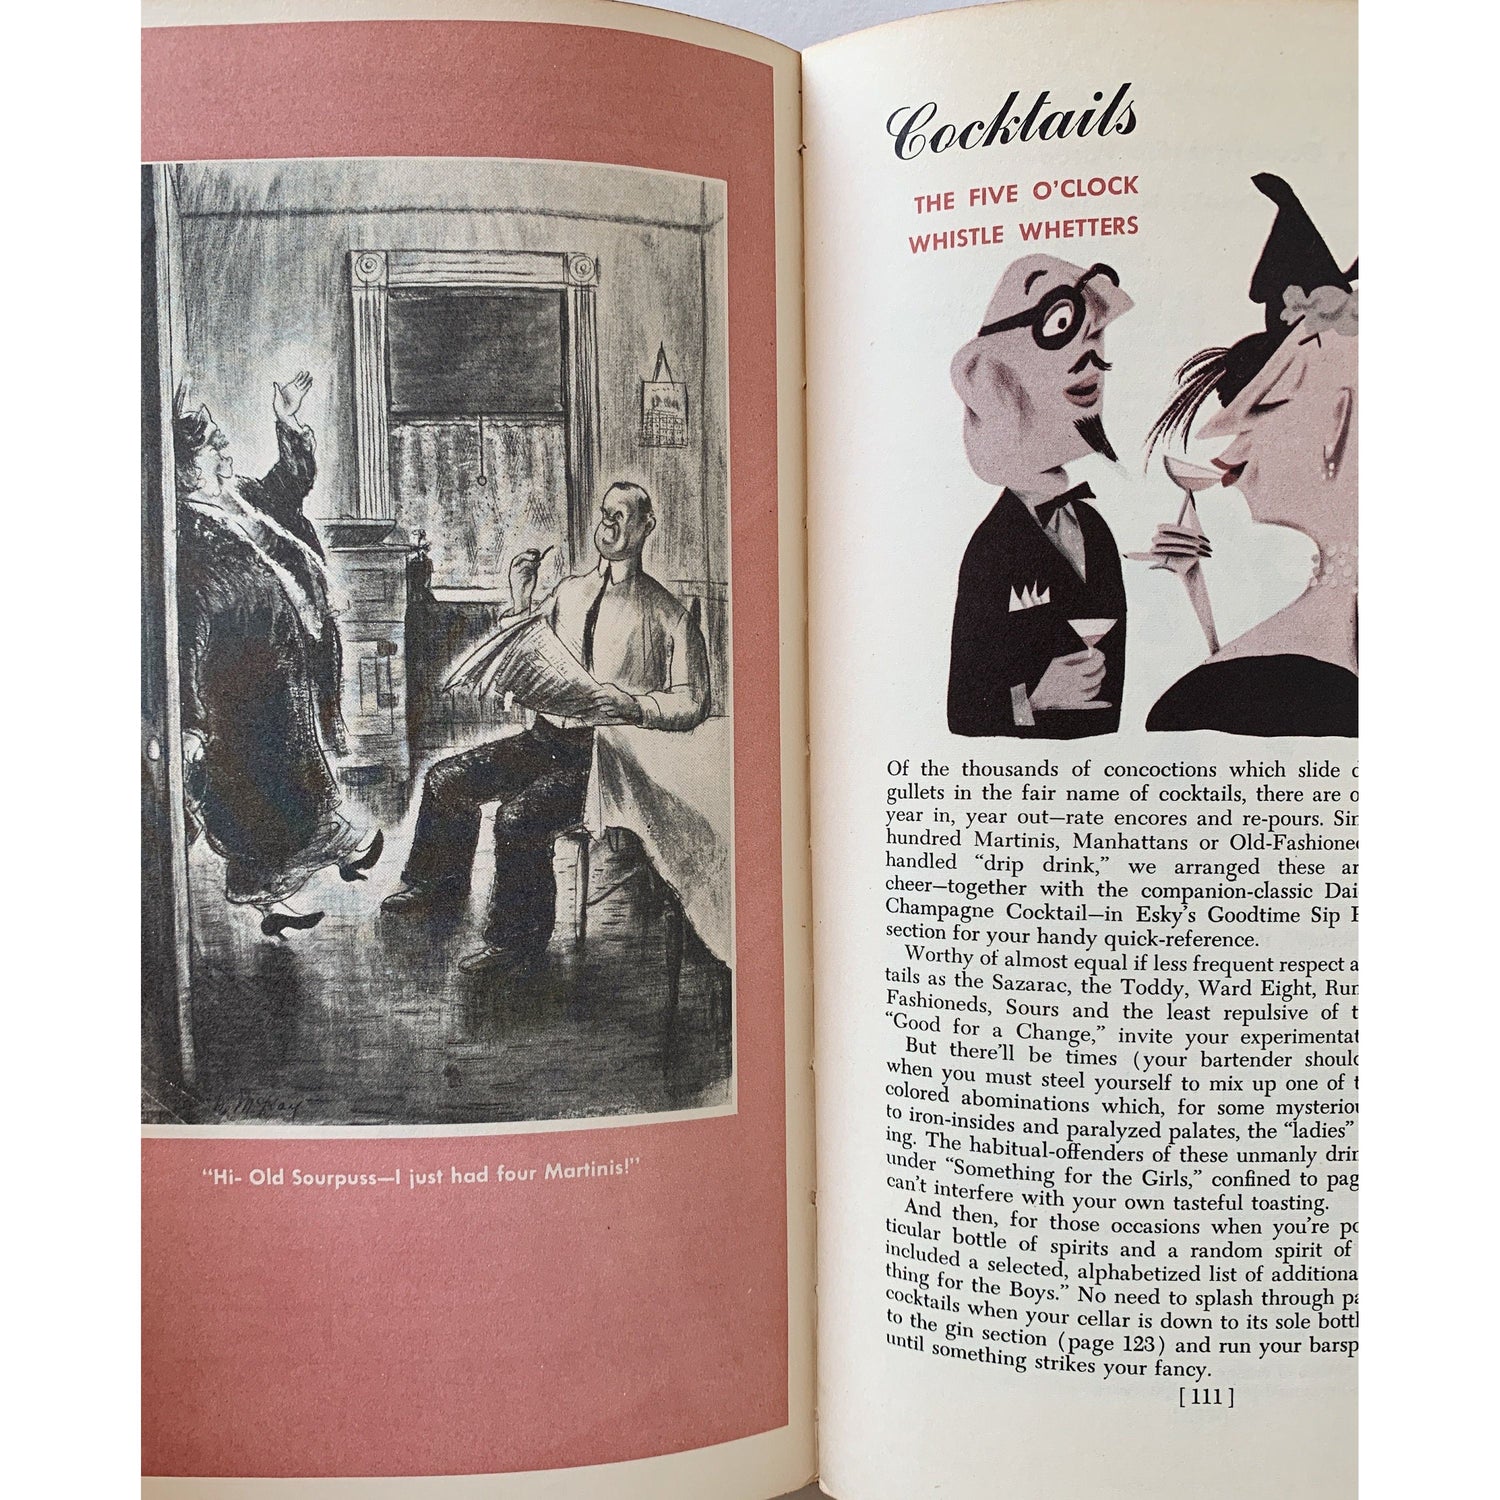 Vintage Esquire Books for Men, Entertaining Books, Gift of Husband